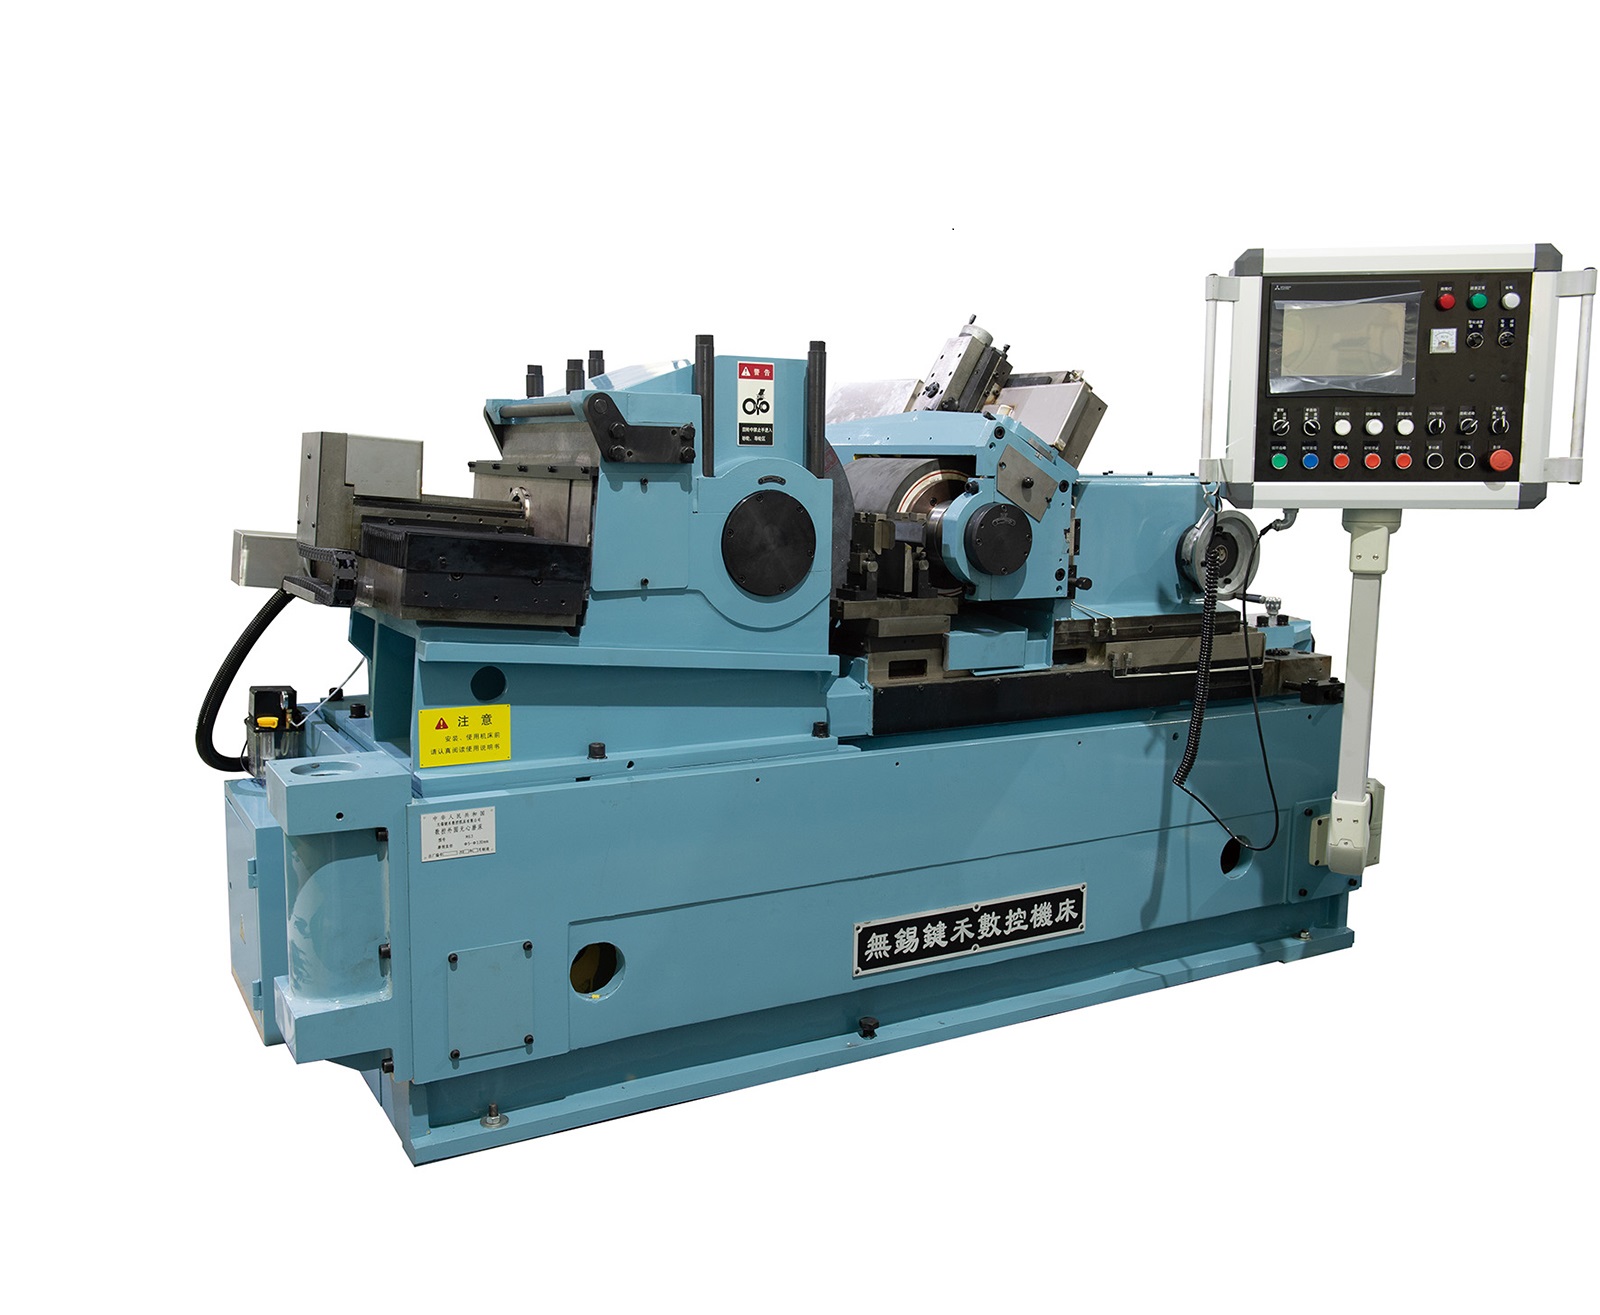 M63 CNC Centerless Grinding Machine